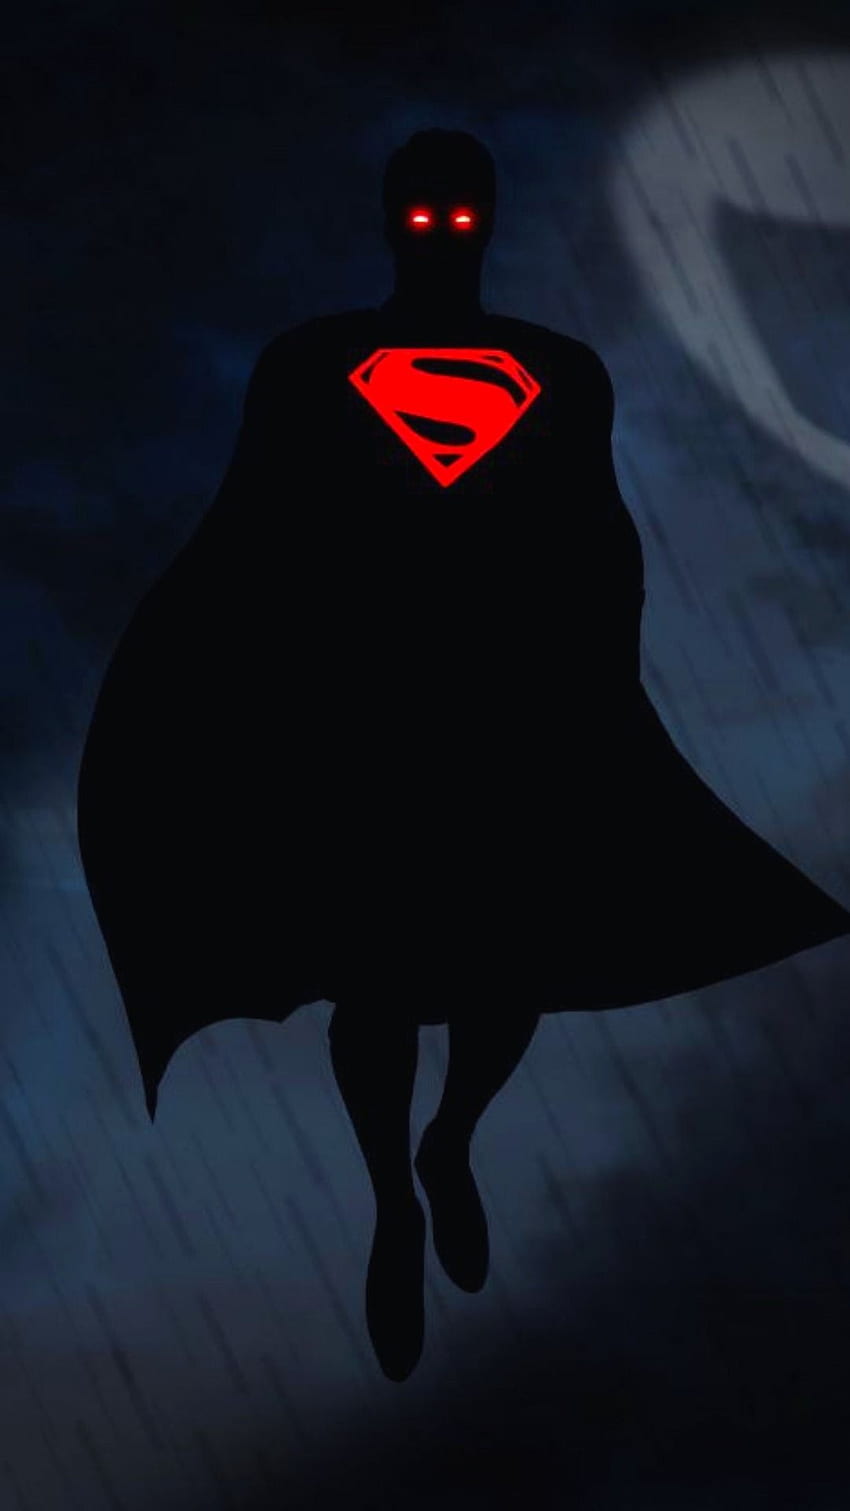 Black Superman Wallpapers - Top 35 Best Black Superman Backgrounds